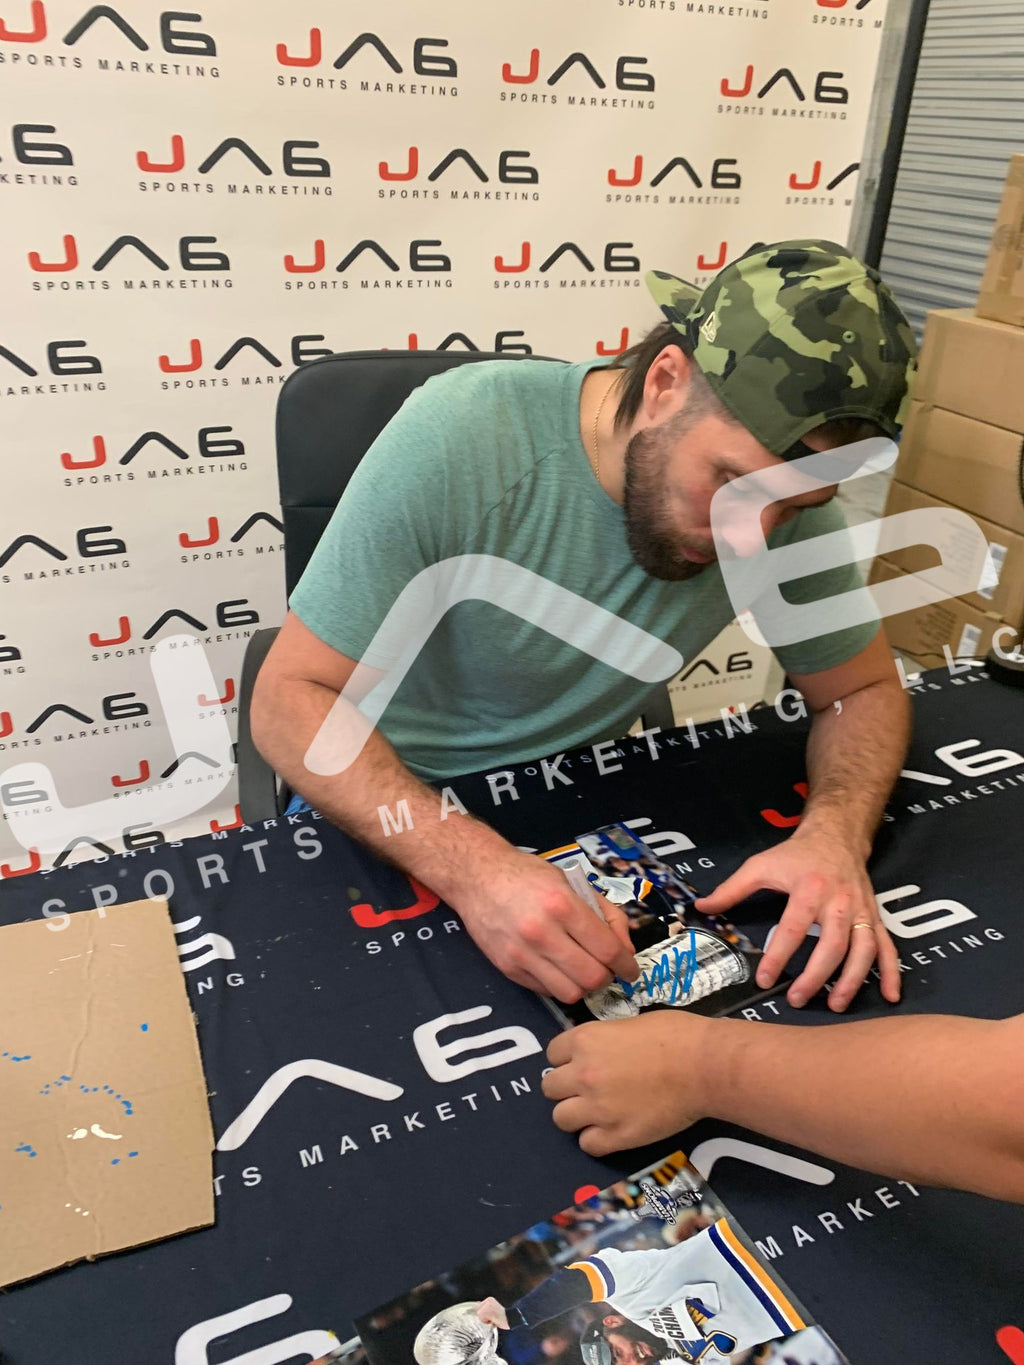 Pat Maroon signed 8x10 photo NHL St. Louis Blues JSA COA Tampa Bay Lightning